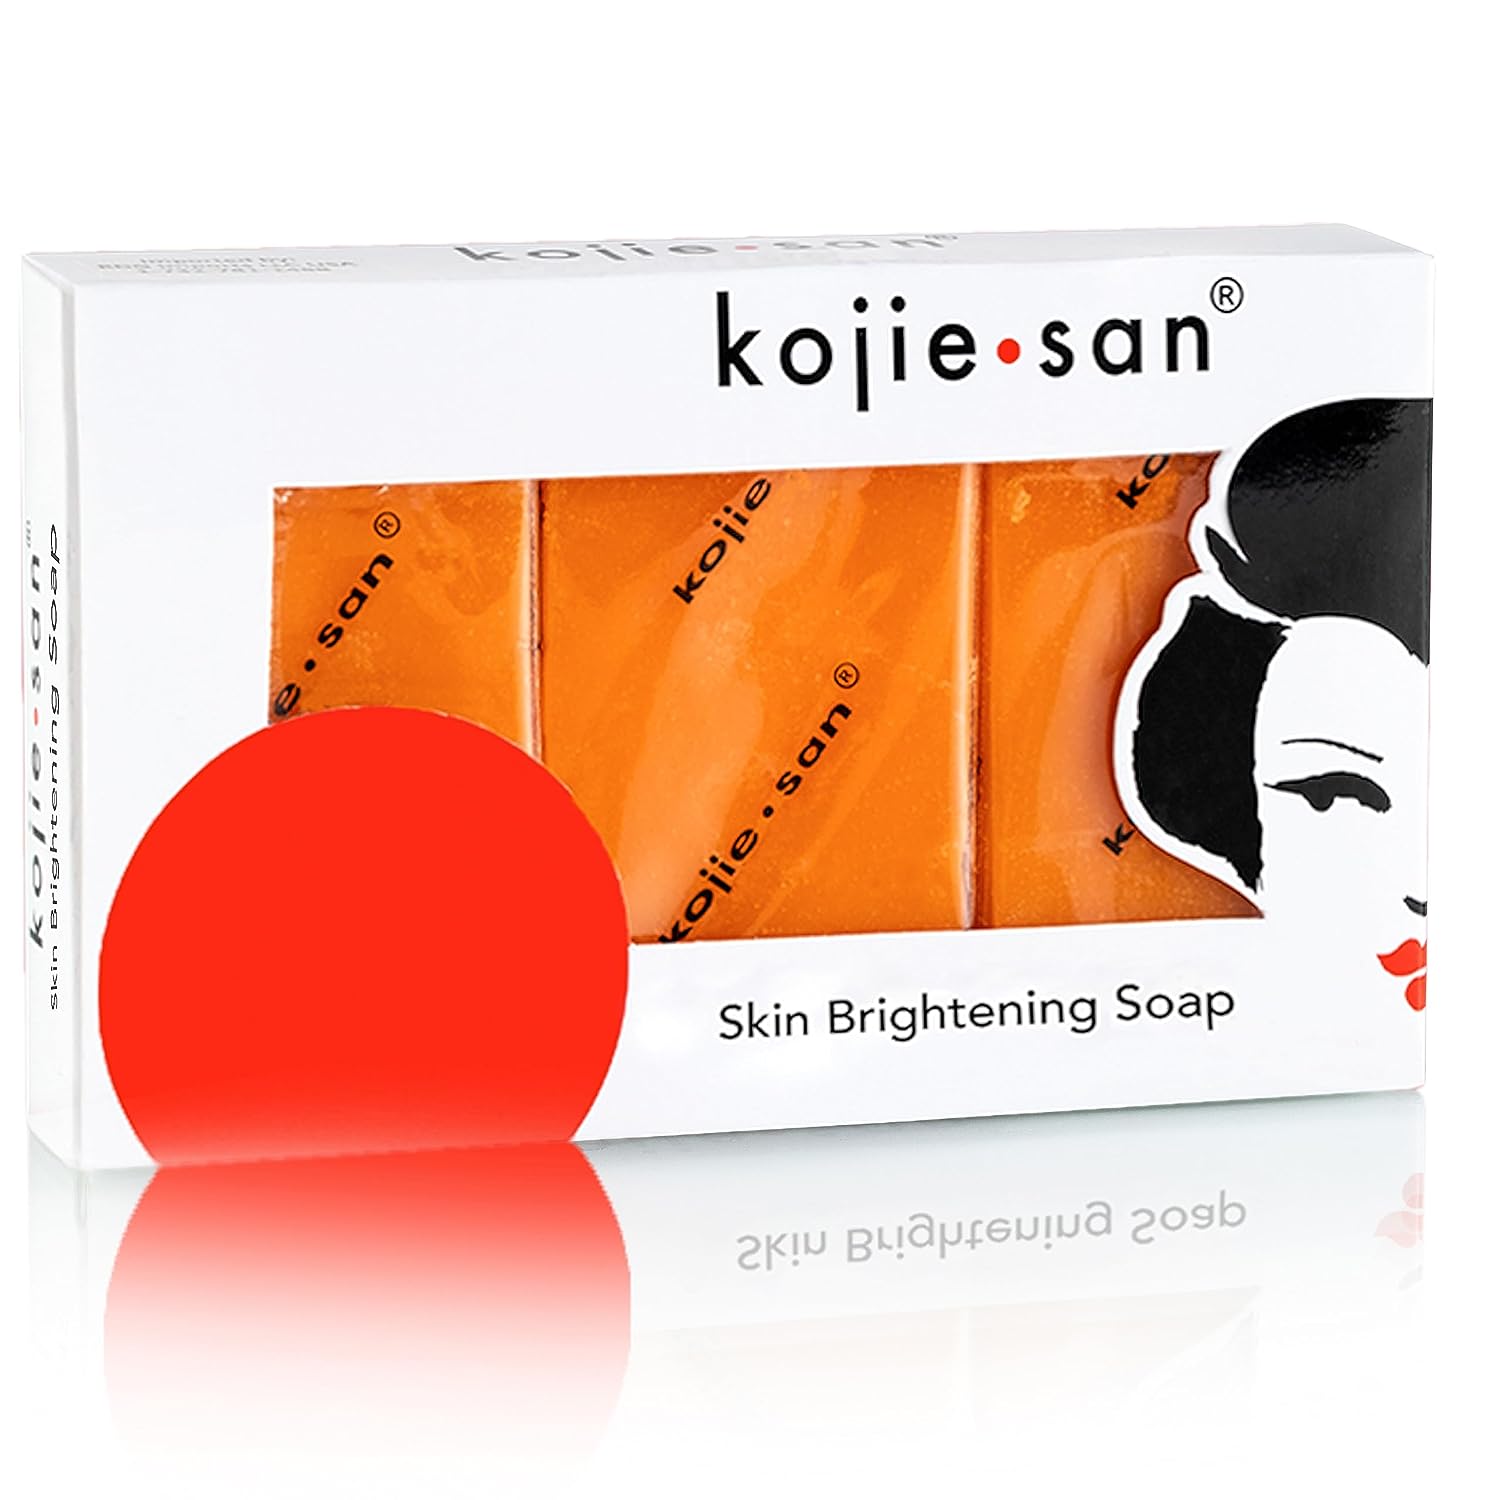 Kojie San Skin Brightening Soap - Original Kojic Acid Soap for Dark Spots, Hyperpigmentation, & Scars with Coconut & Tea Tree Oil - 65g x 3 Bars